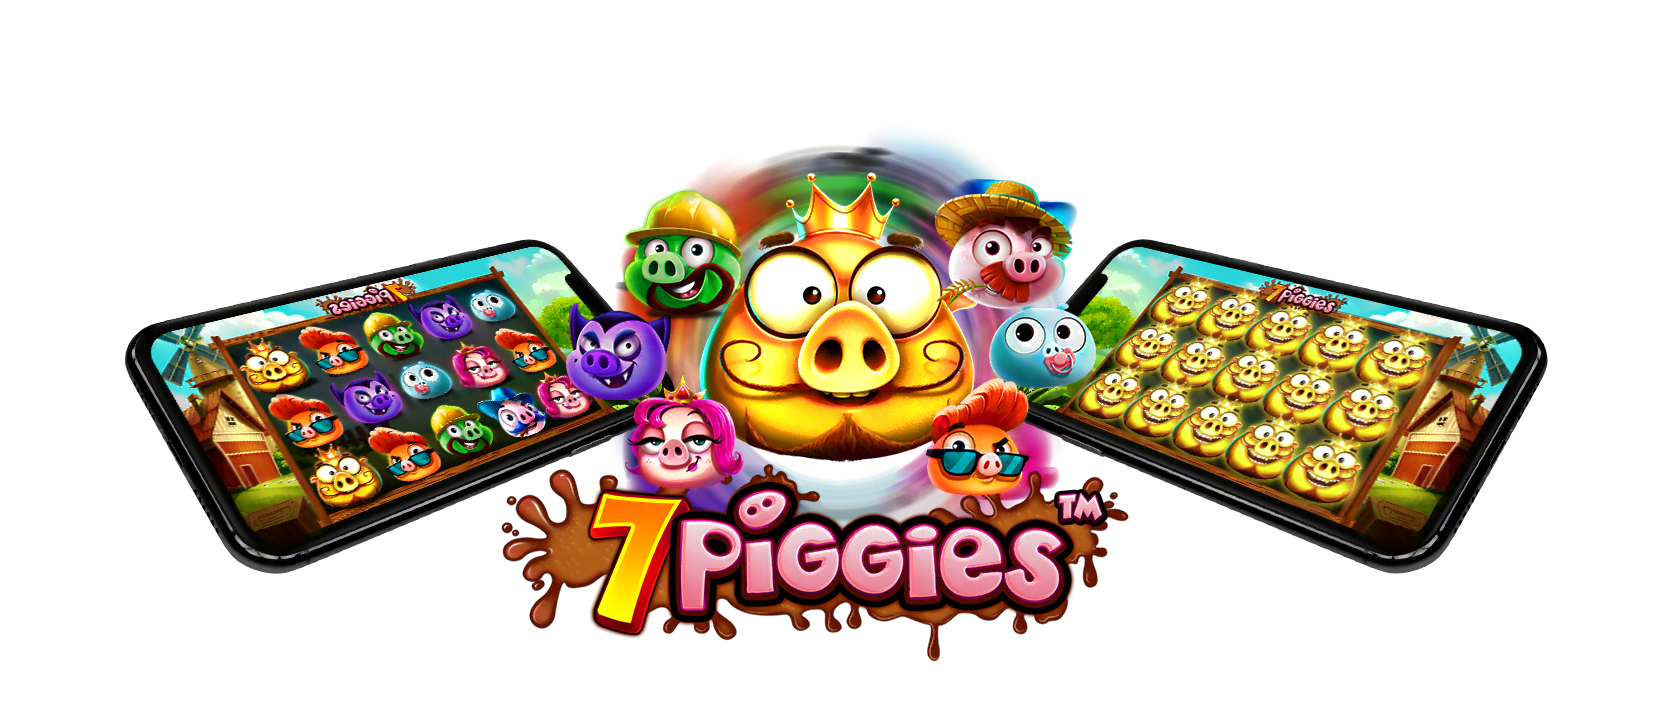 7 piggies slot review